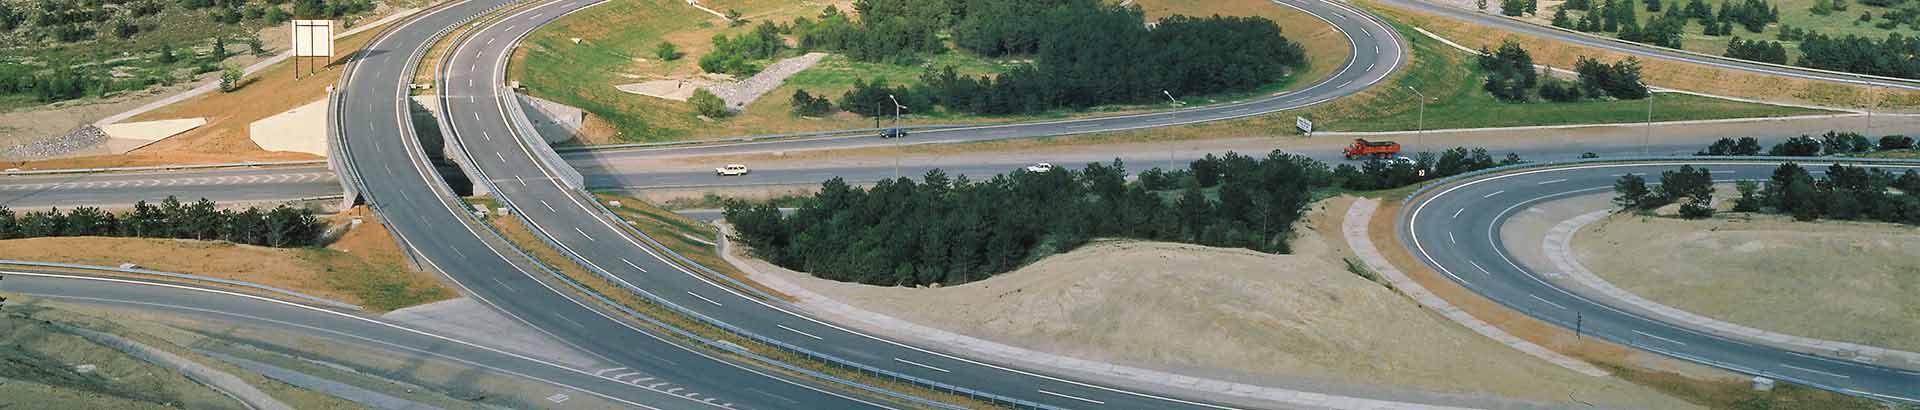 Ankara-Gerede Highway